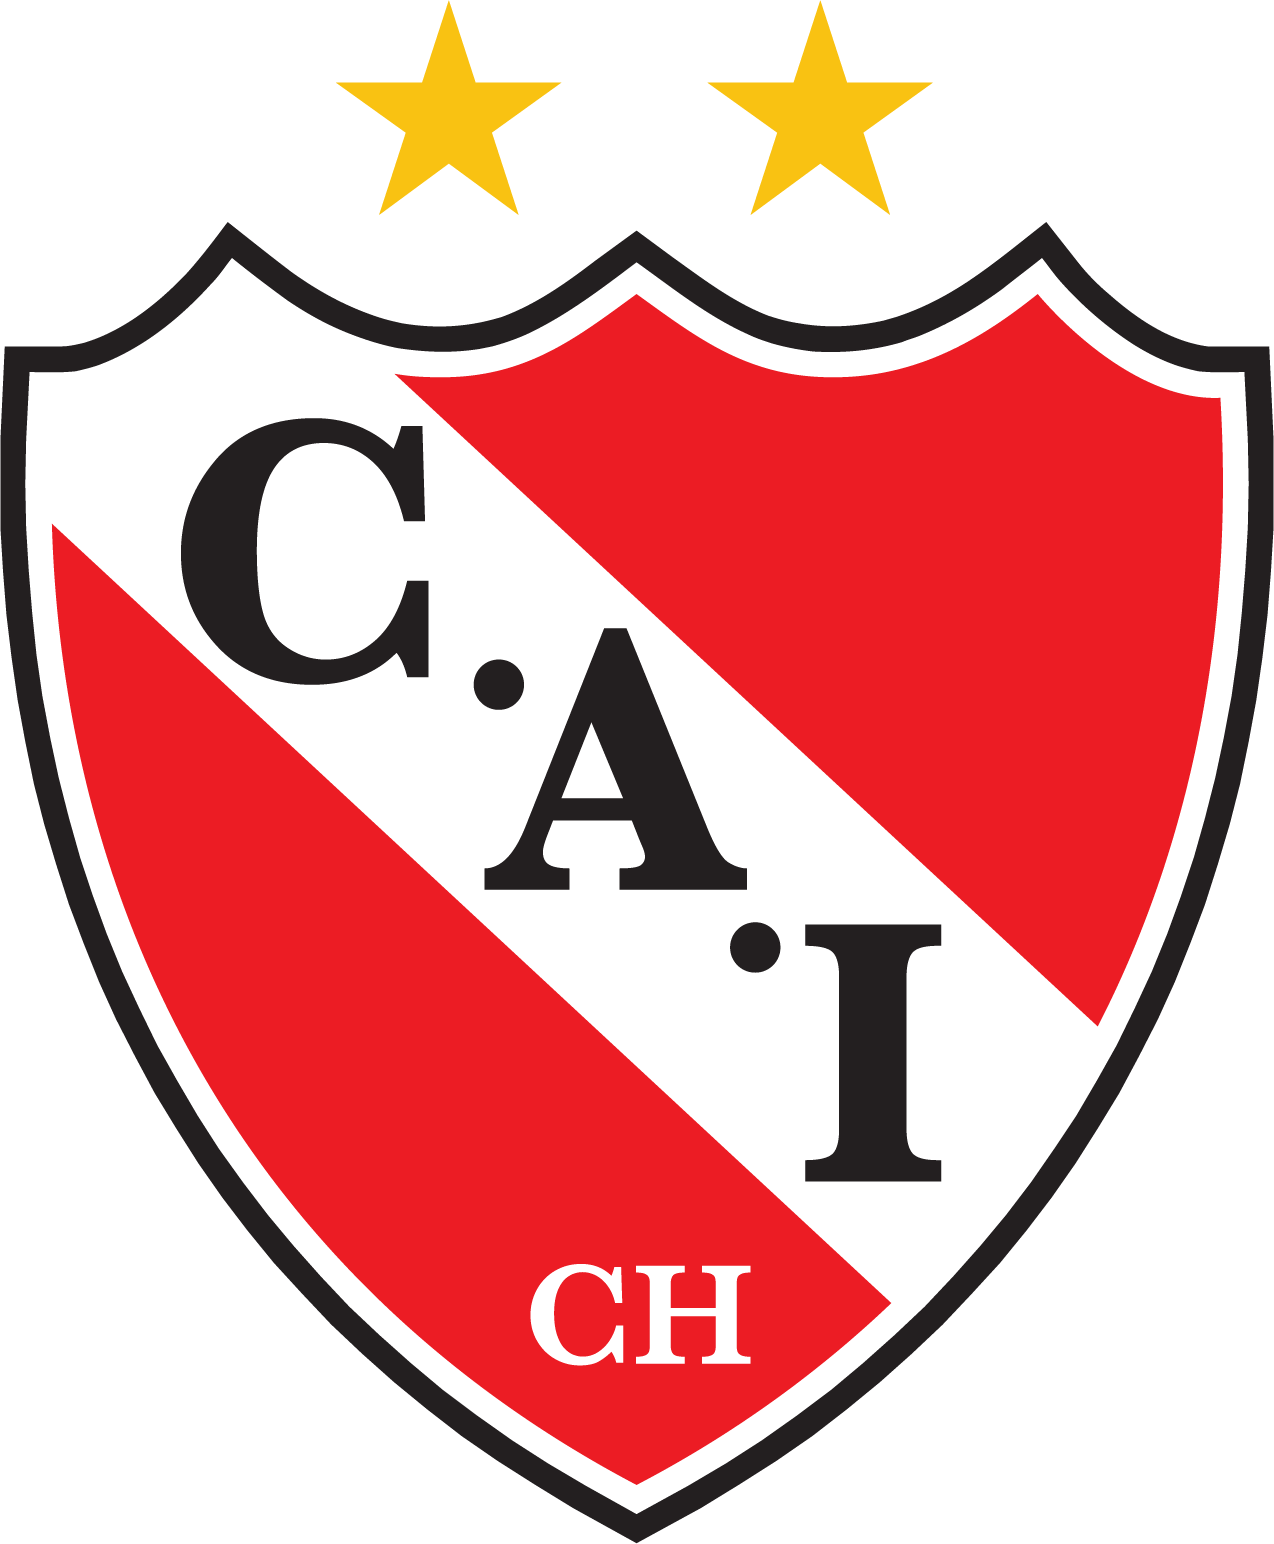 Independiente de Chivilcoy (@Cai_chivilcoy) / X